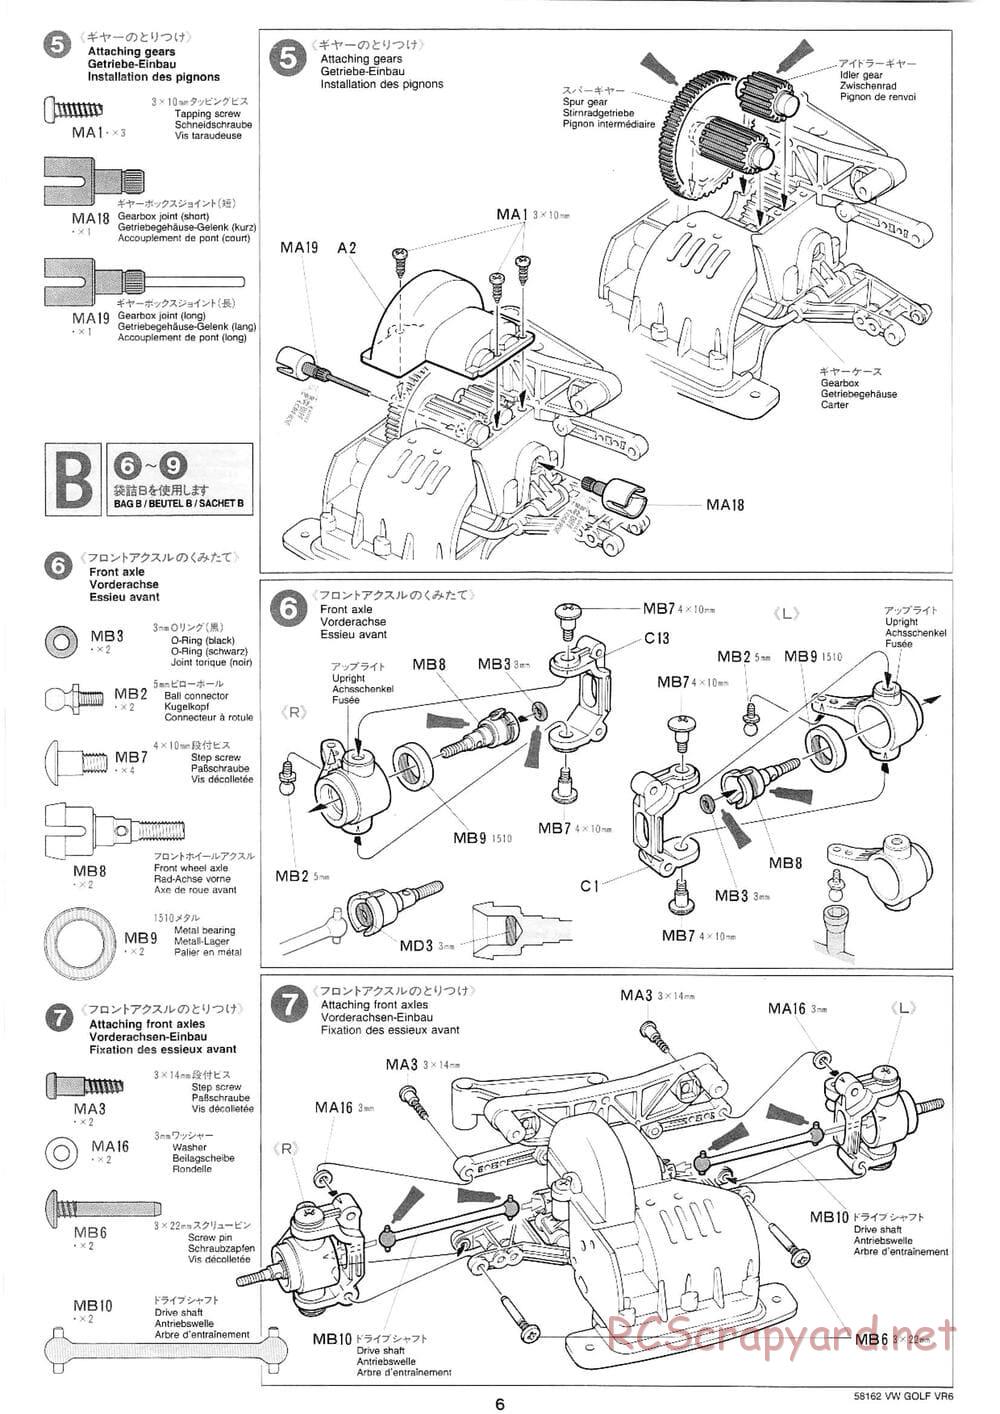 Tamiya - Volkswagen Golf VR6 - FF-01 Chassis - Manual - Page 6